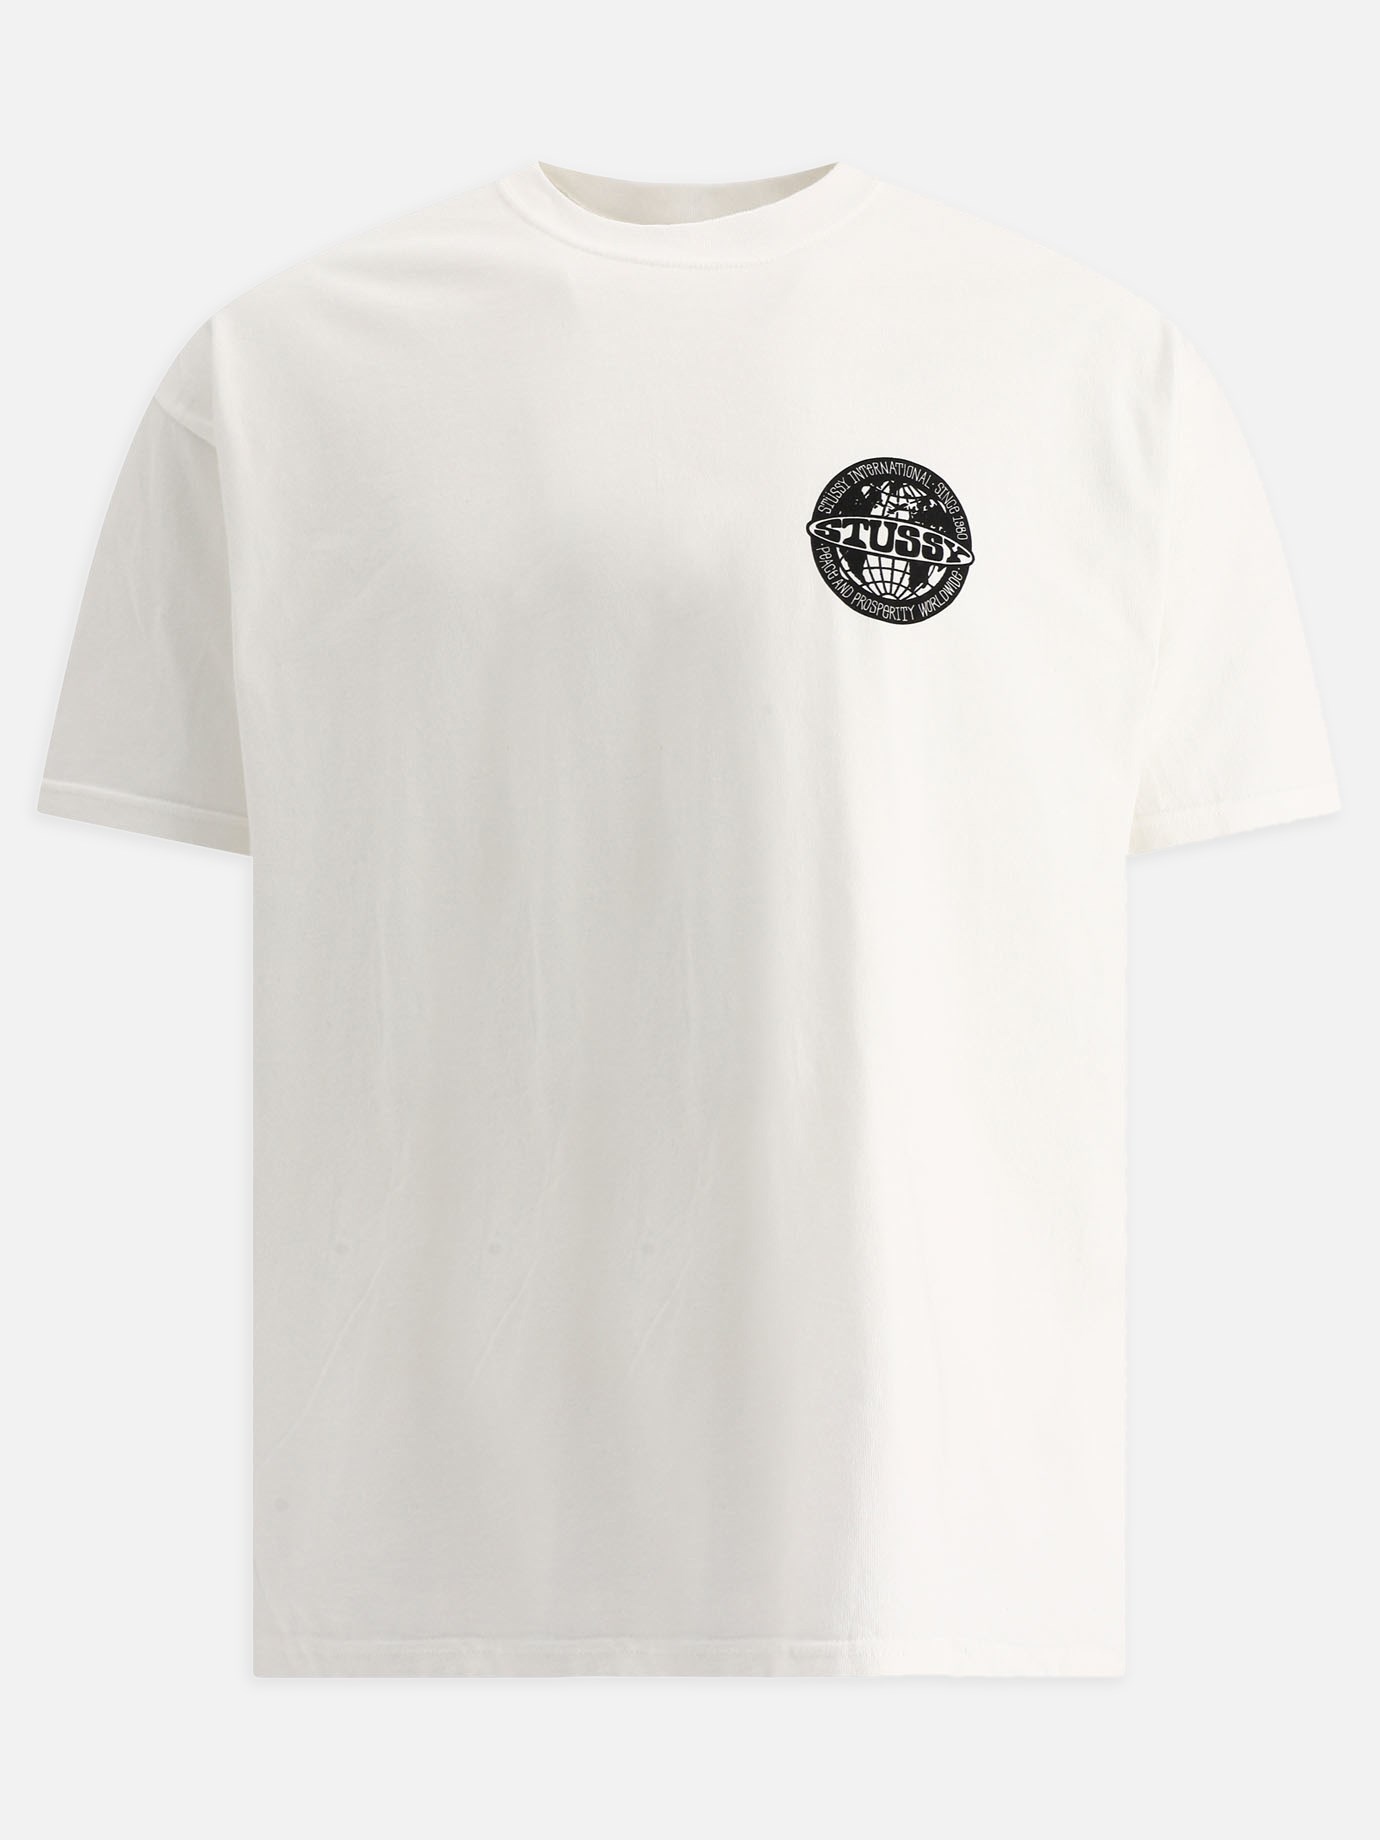 T-shirt  Worldwide Dot by Stüssy - 2